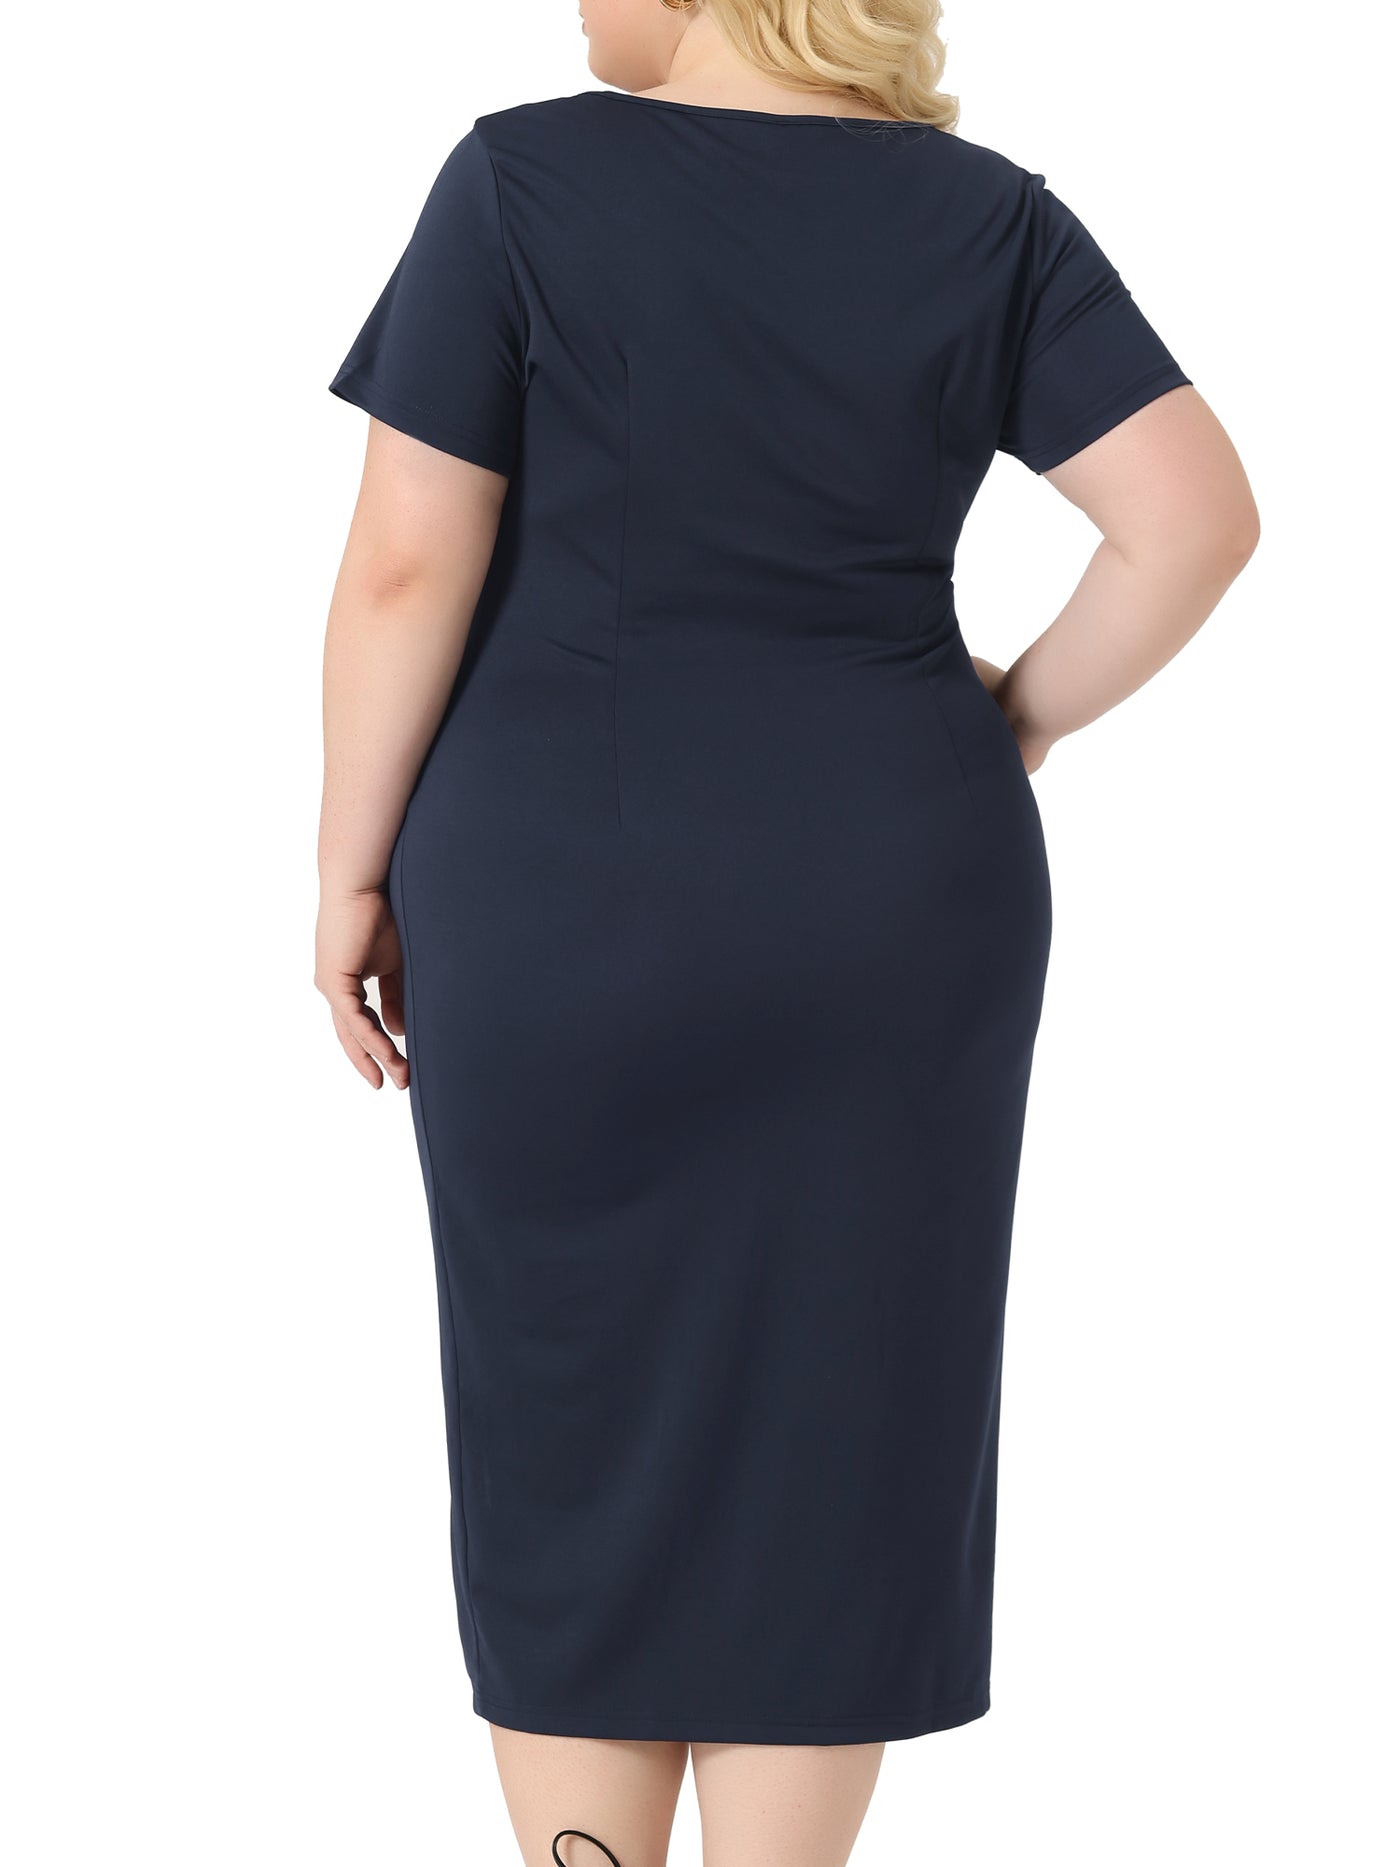 Bublédon Plus Size Dress for Women Round Neck Knot Front Short Sleeve Side Split Dresses